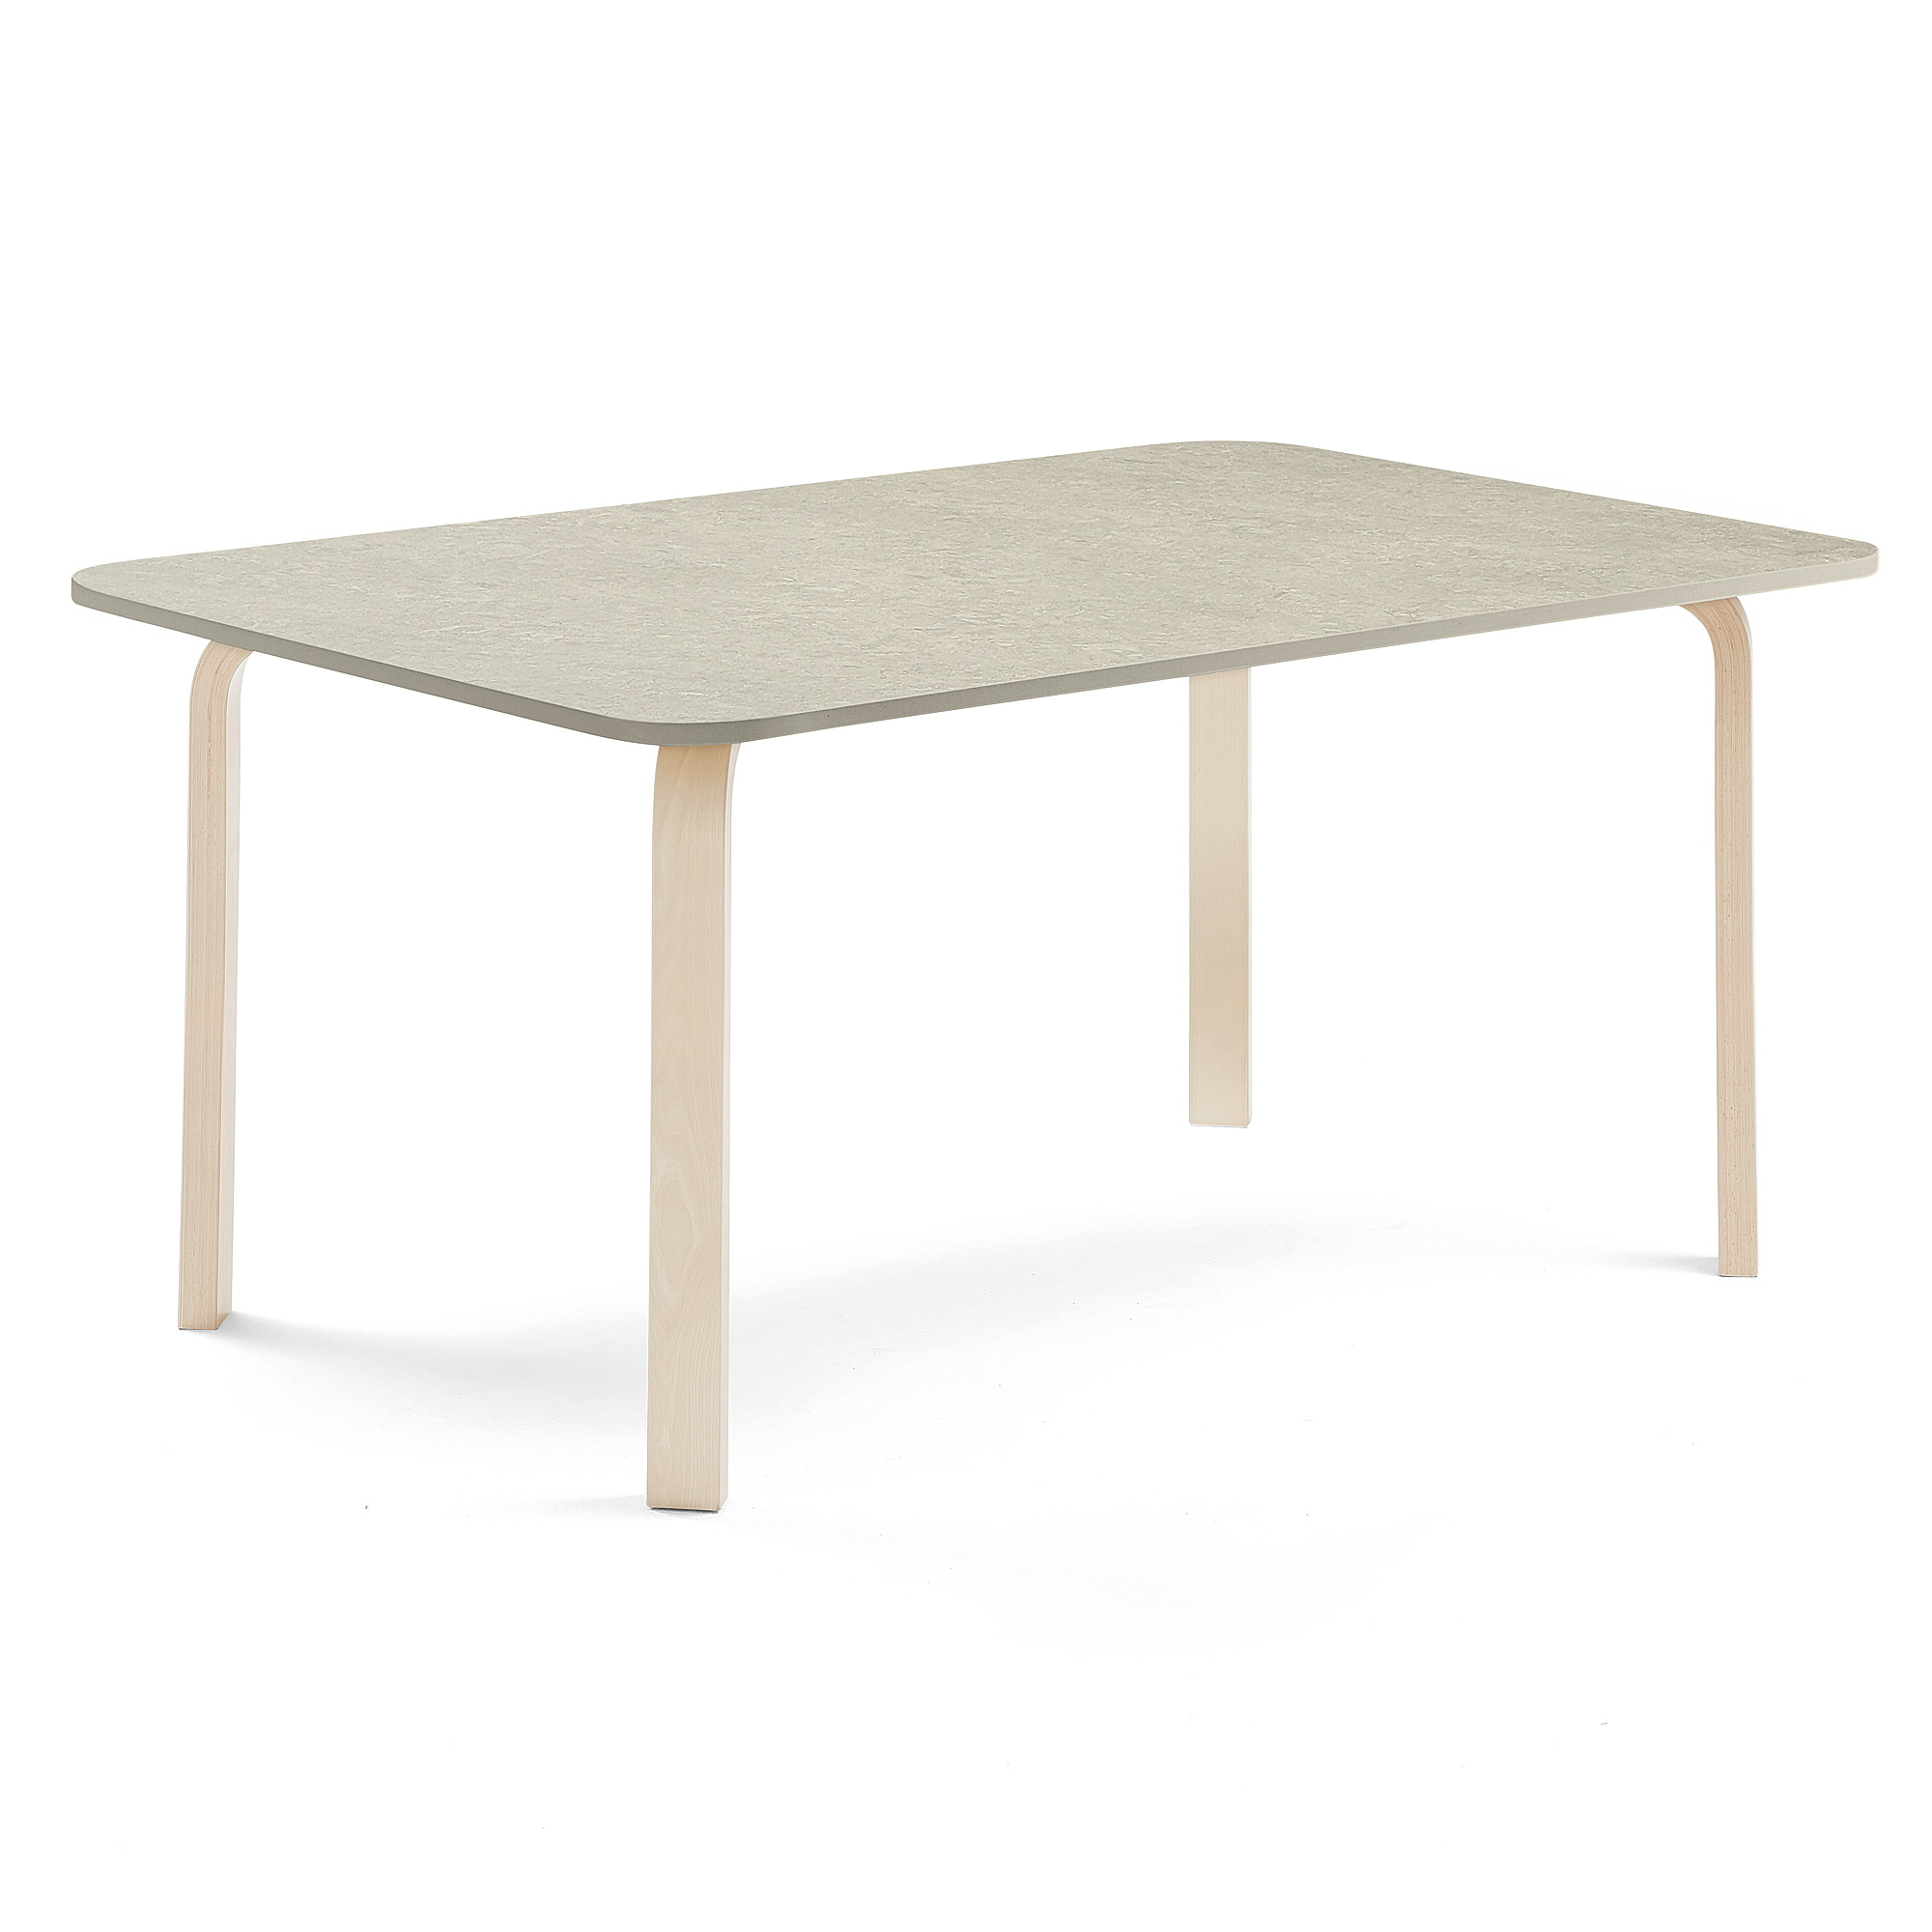 Stůl ELTON, 1800x800x640 mm, bříza, akustické linoleum, šedá